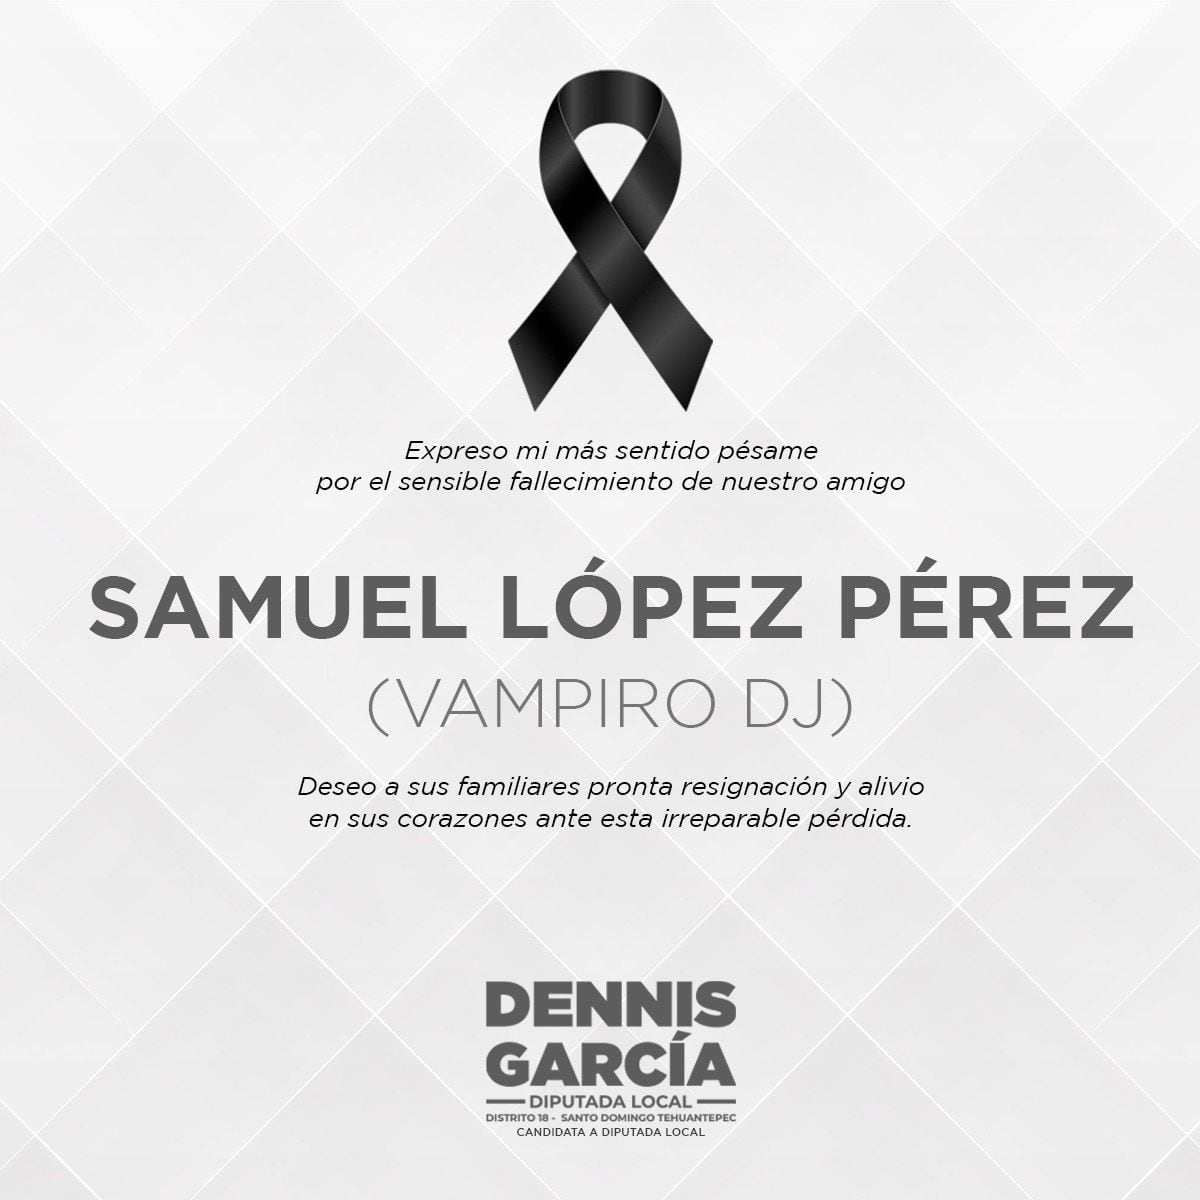 Asesinan en Oaxaca a Samuel López, Vampiro DJ